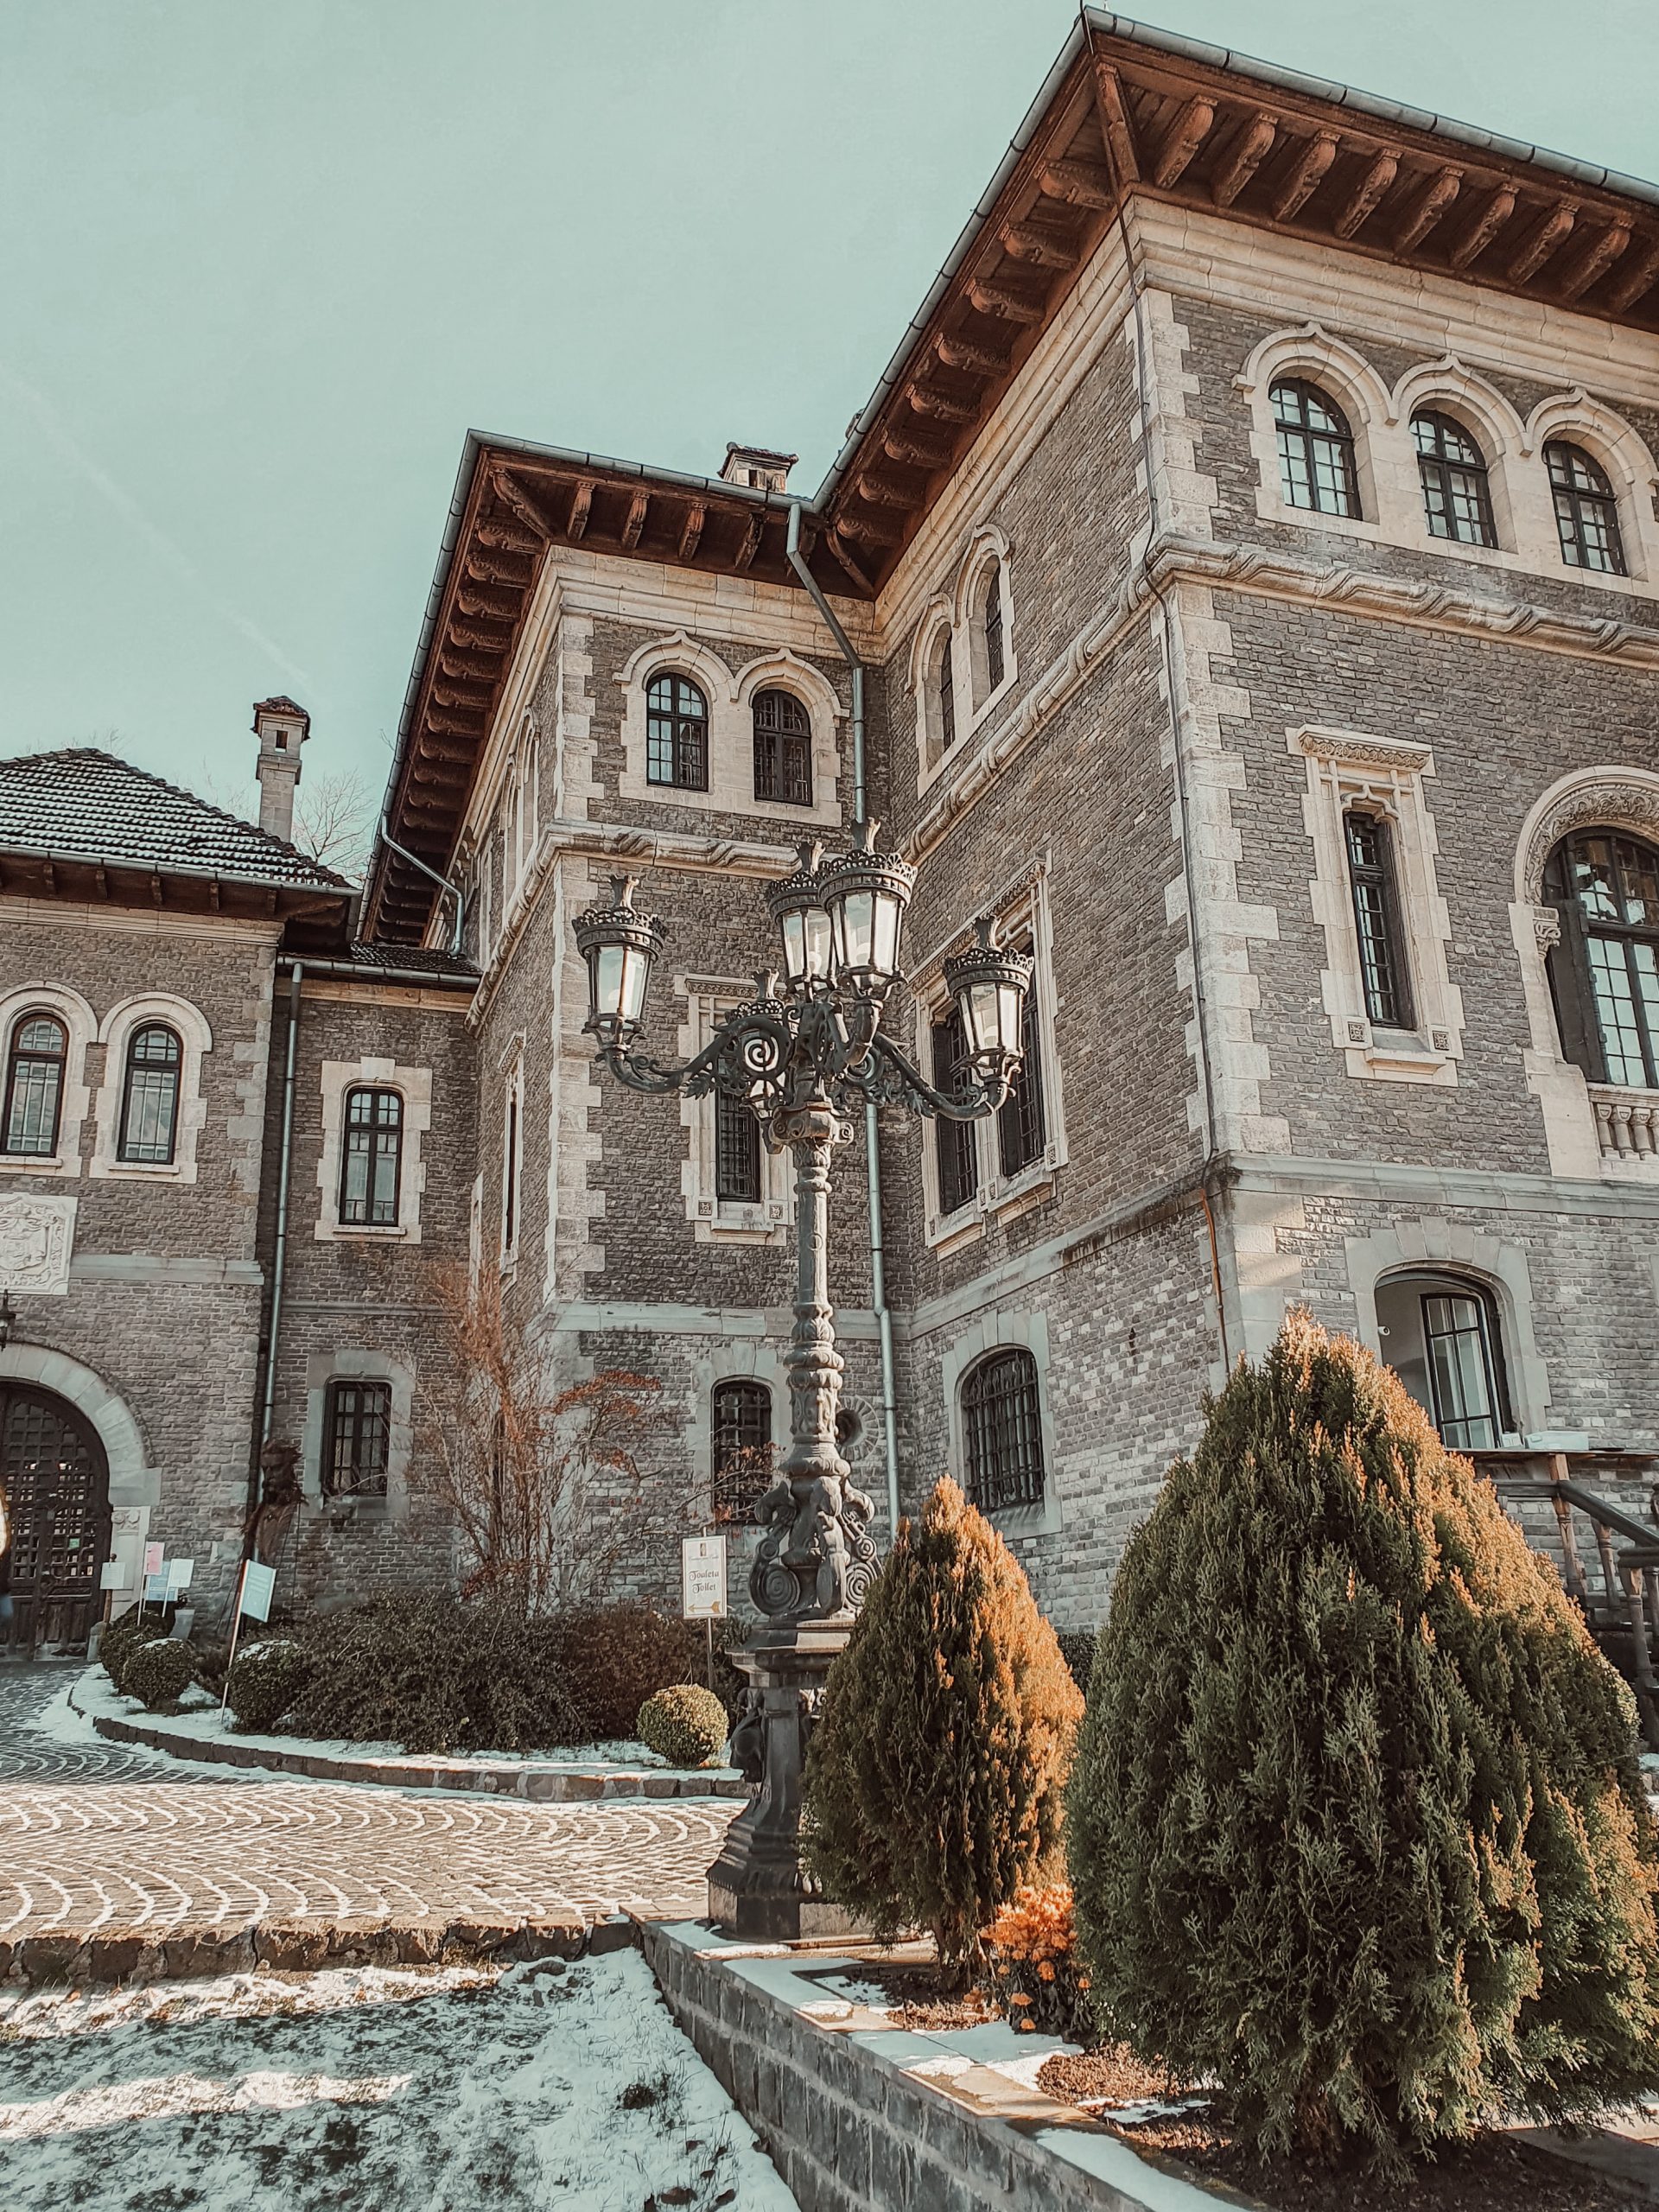 Cantacuzino Castle - Romanian castles that every tourist must visit